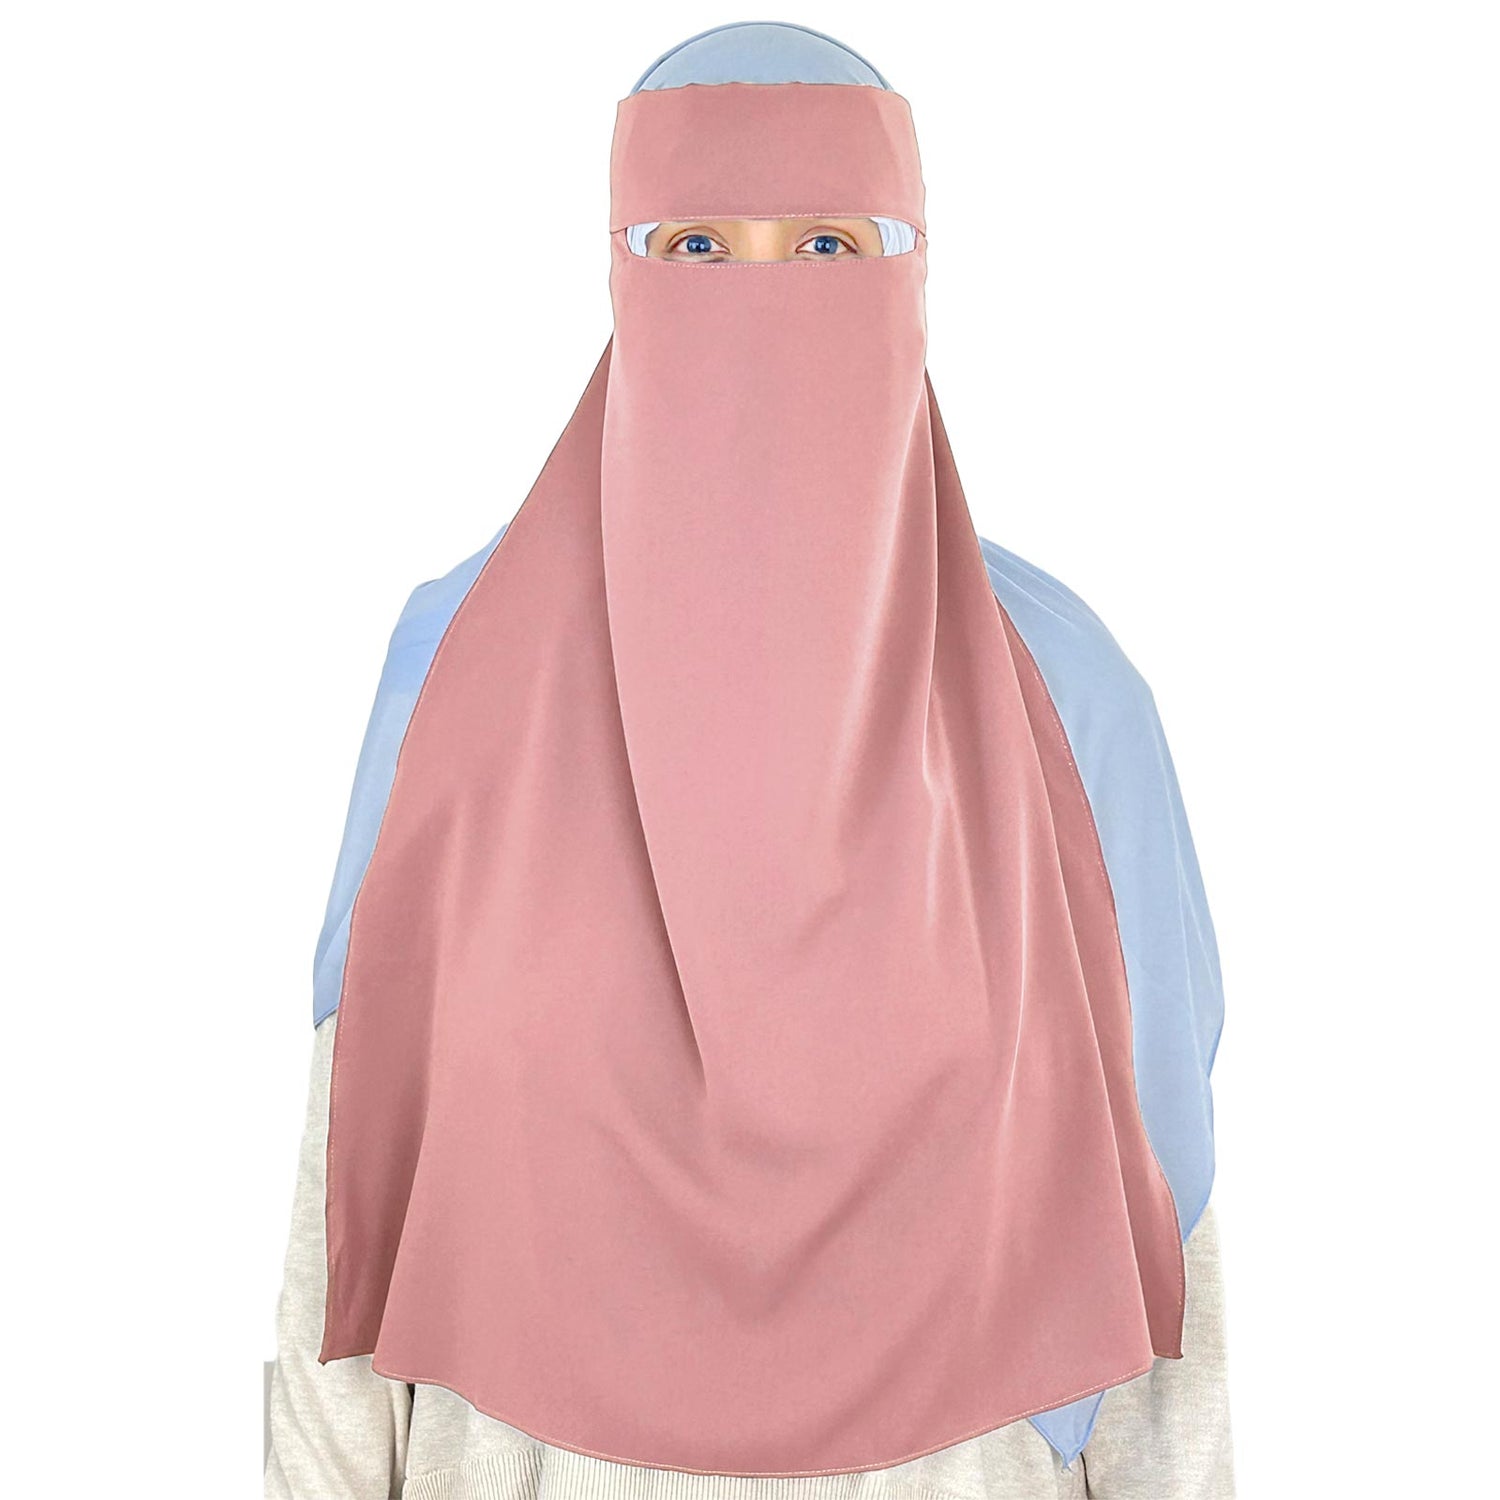 hijab, niqab, shawl at an affordable price